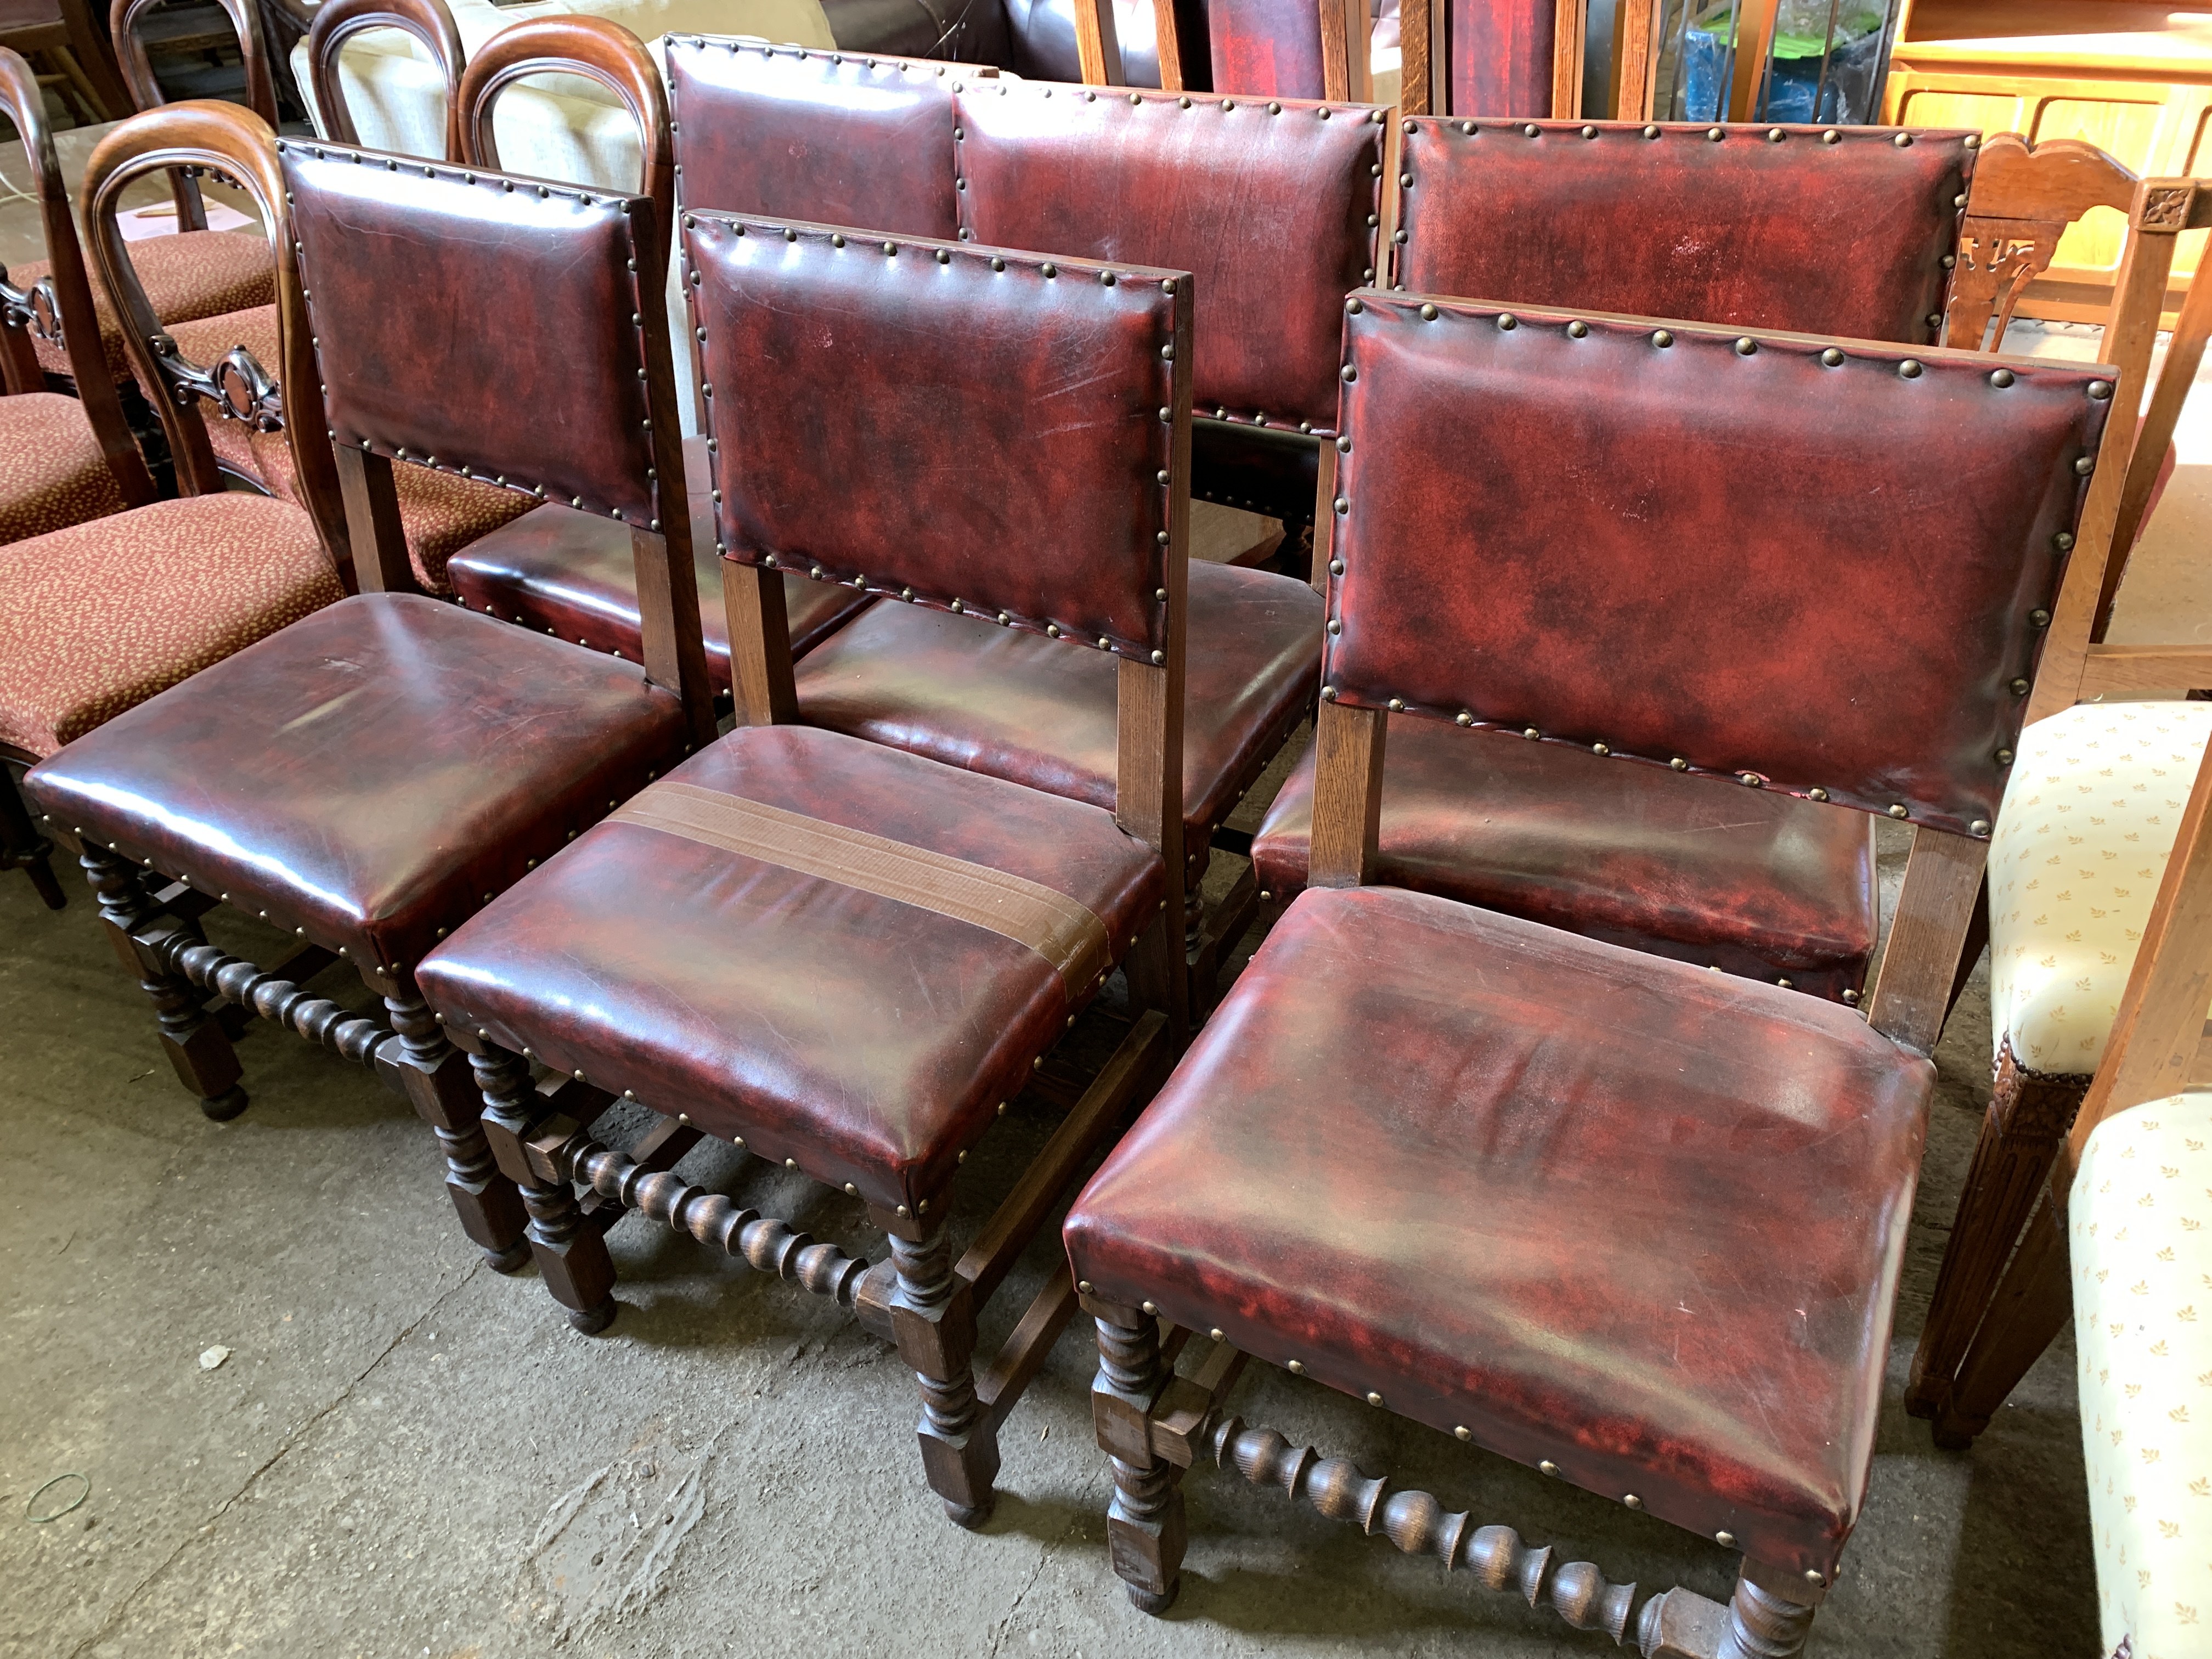 Six oak dining chairs